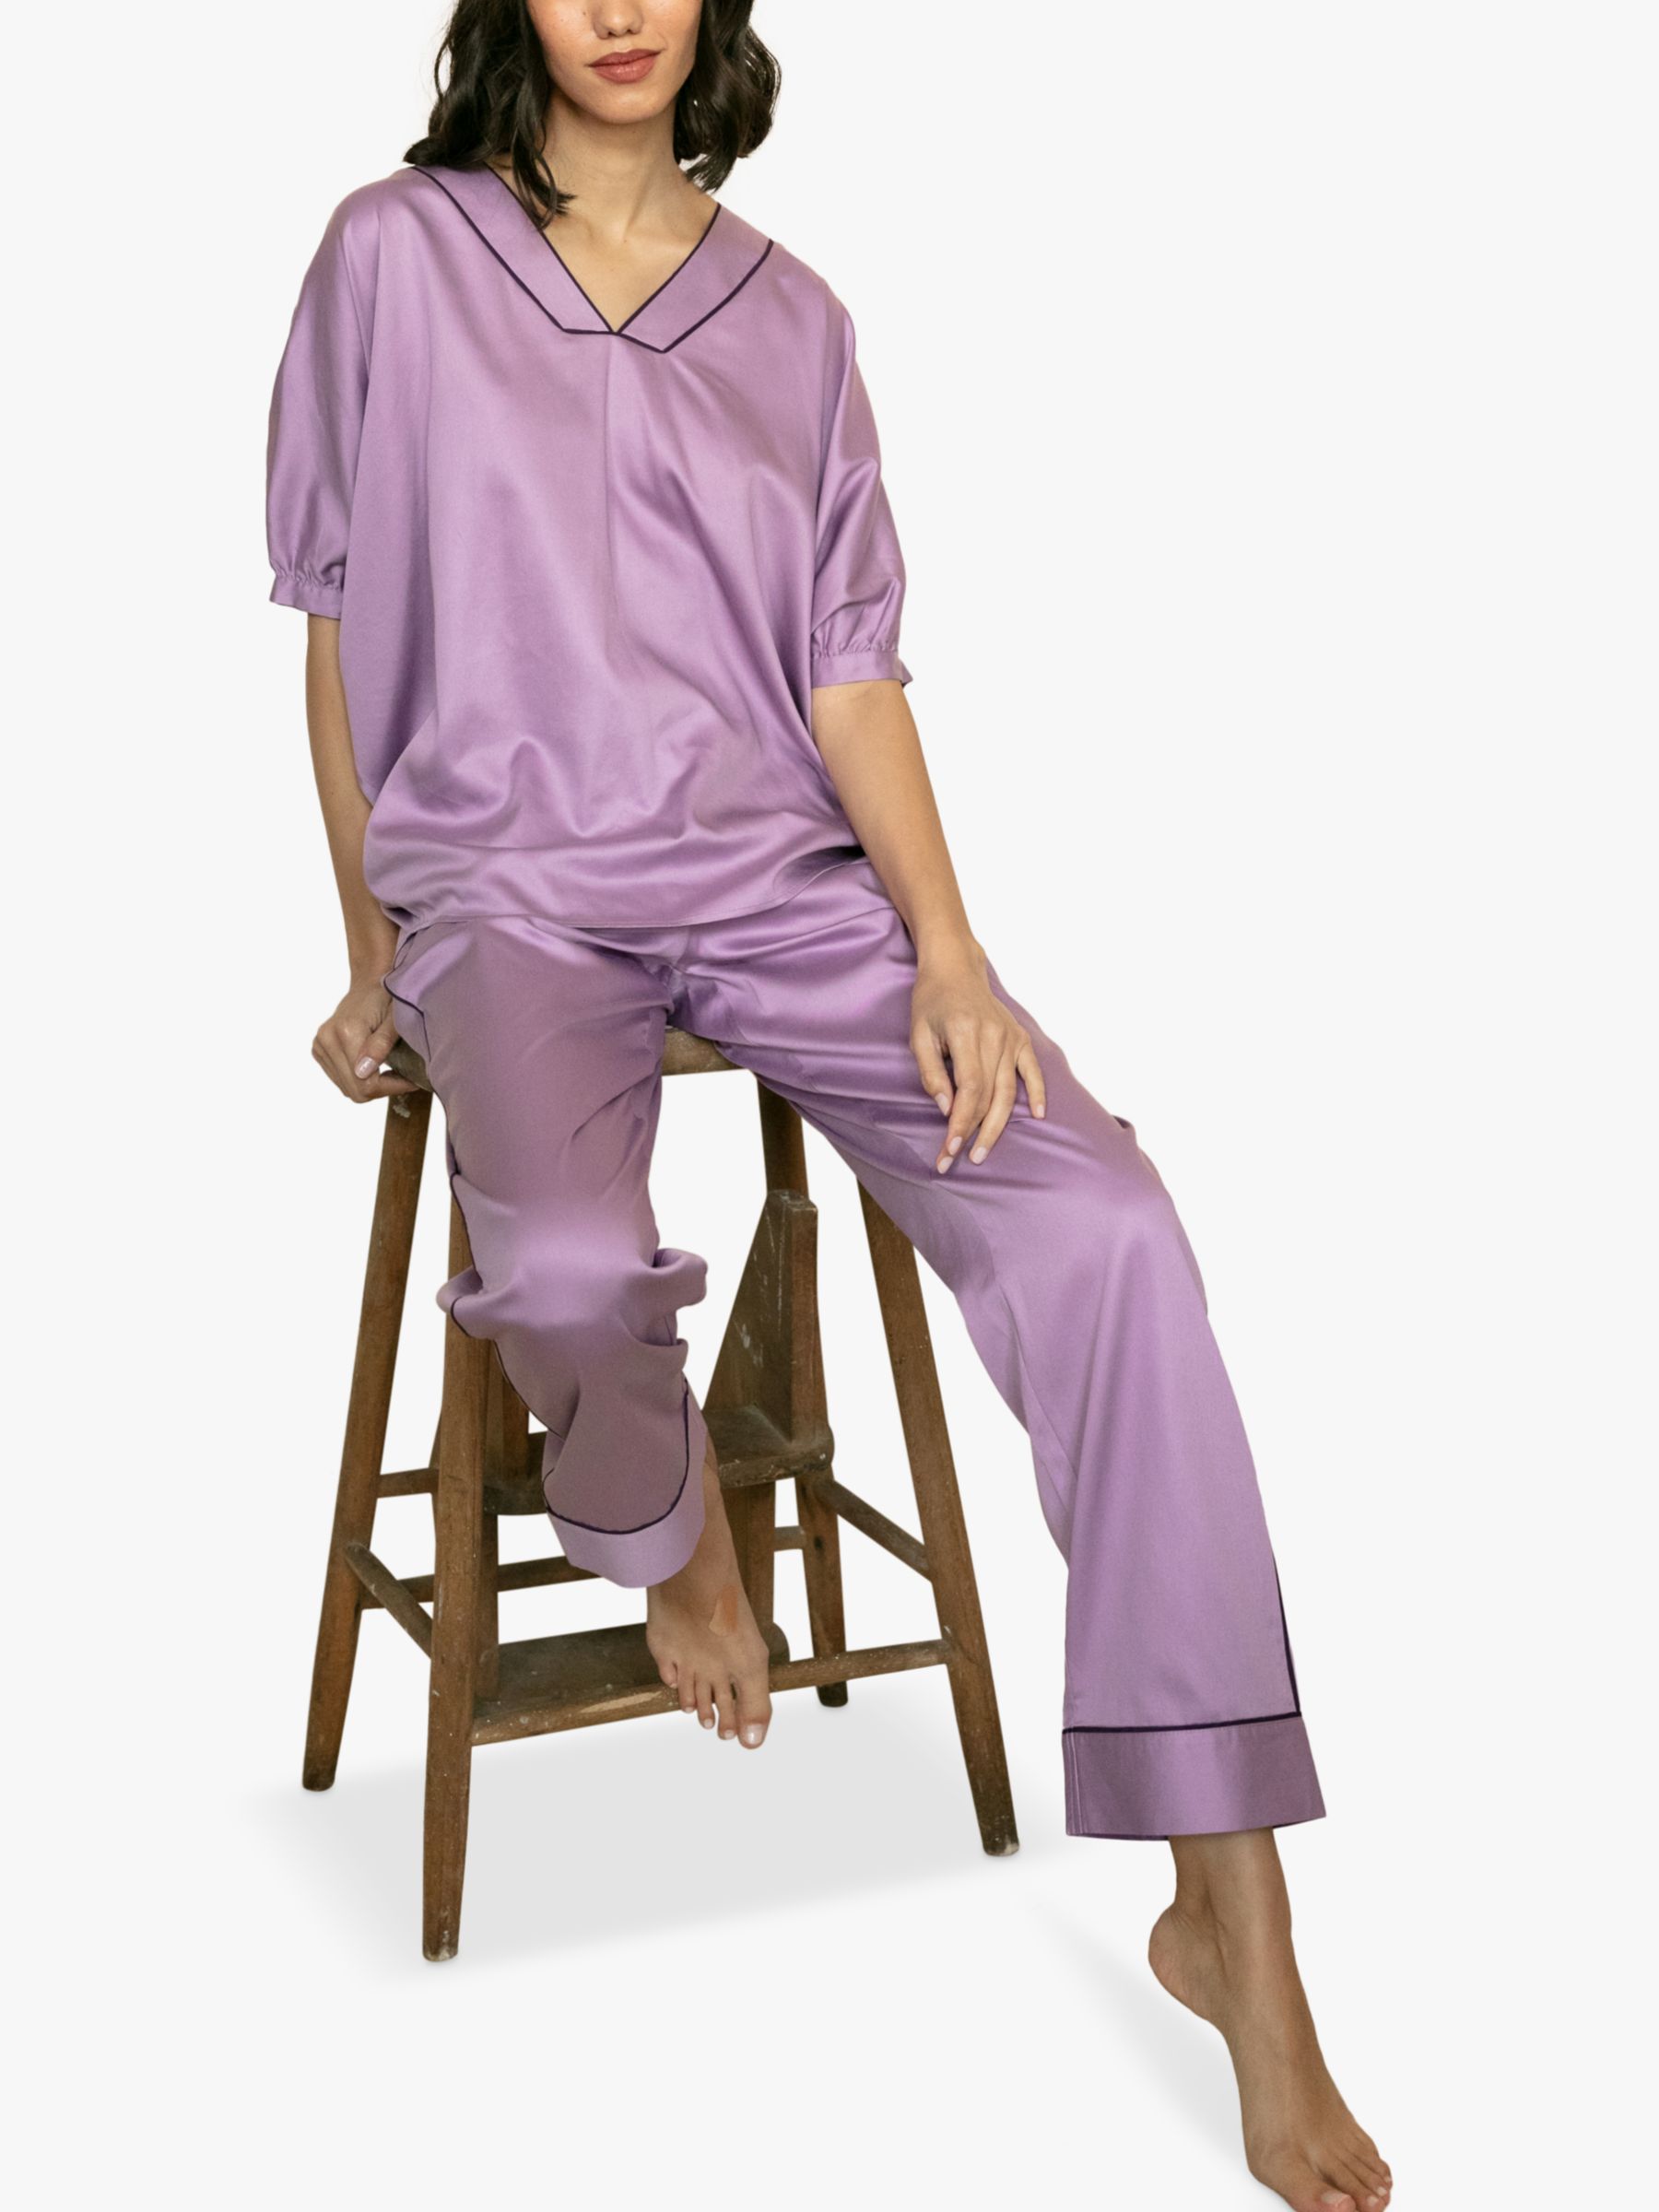 Fable & Eve Silky Pyjama Set, Lilac, 8